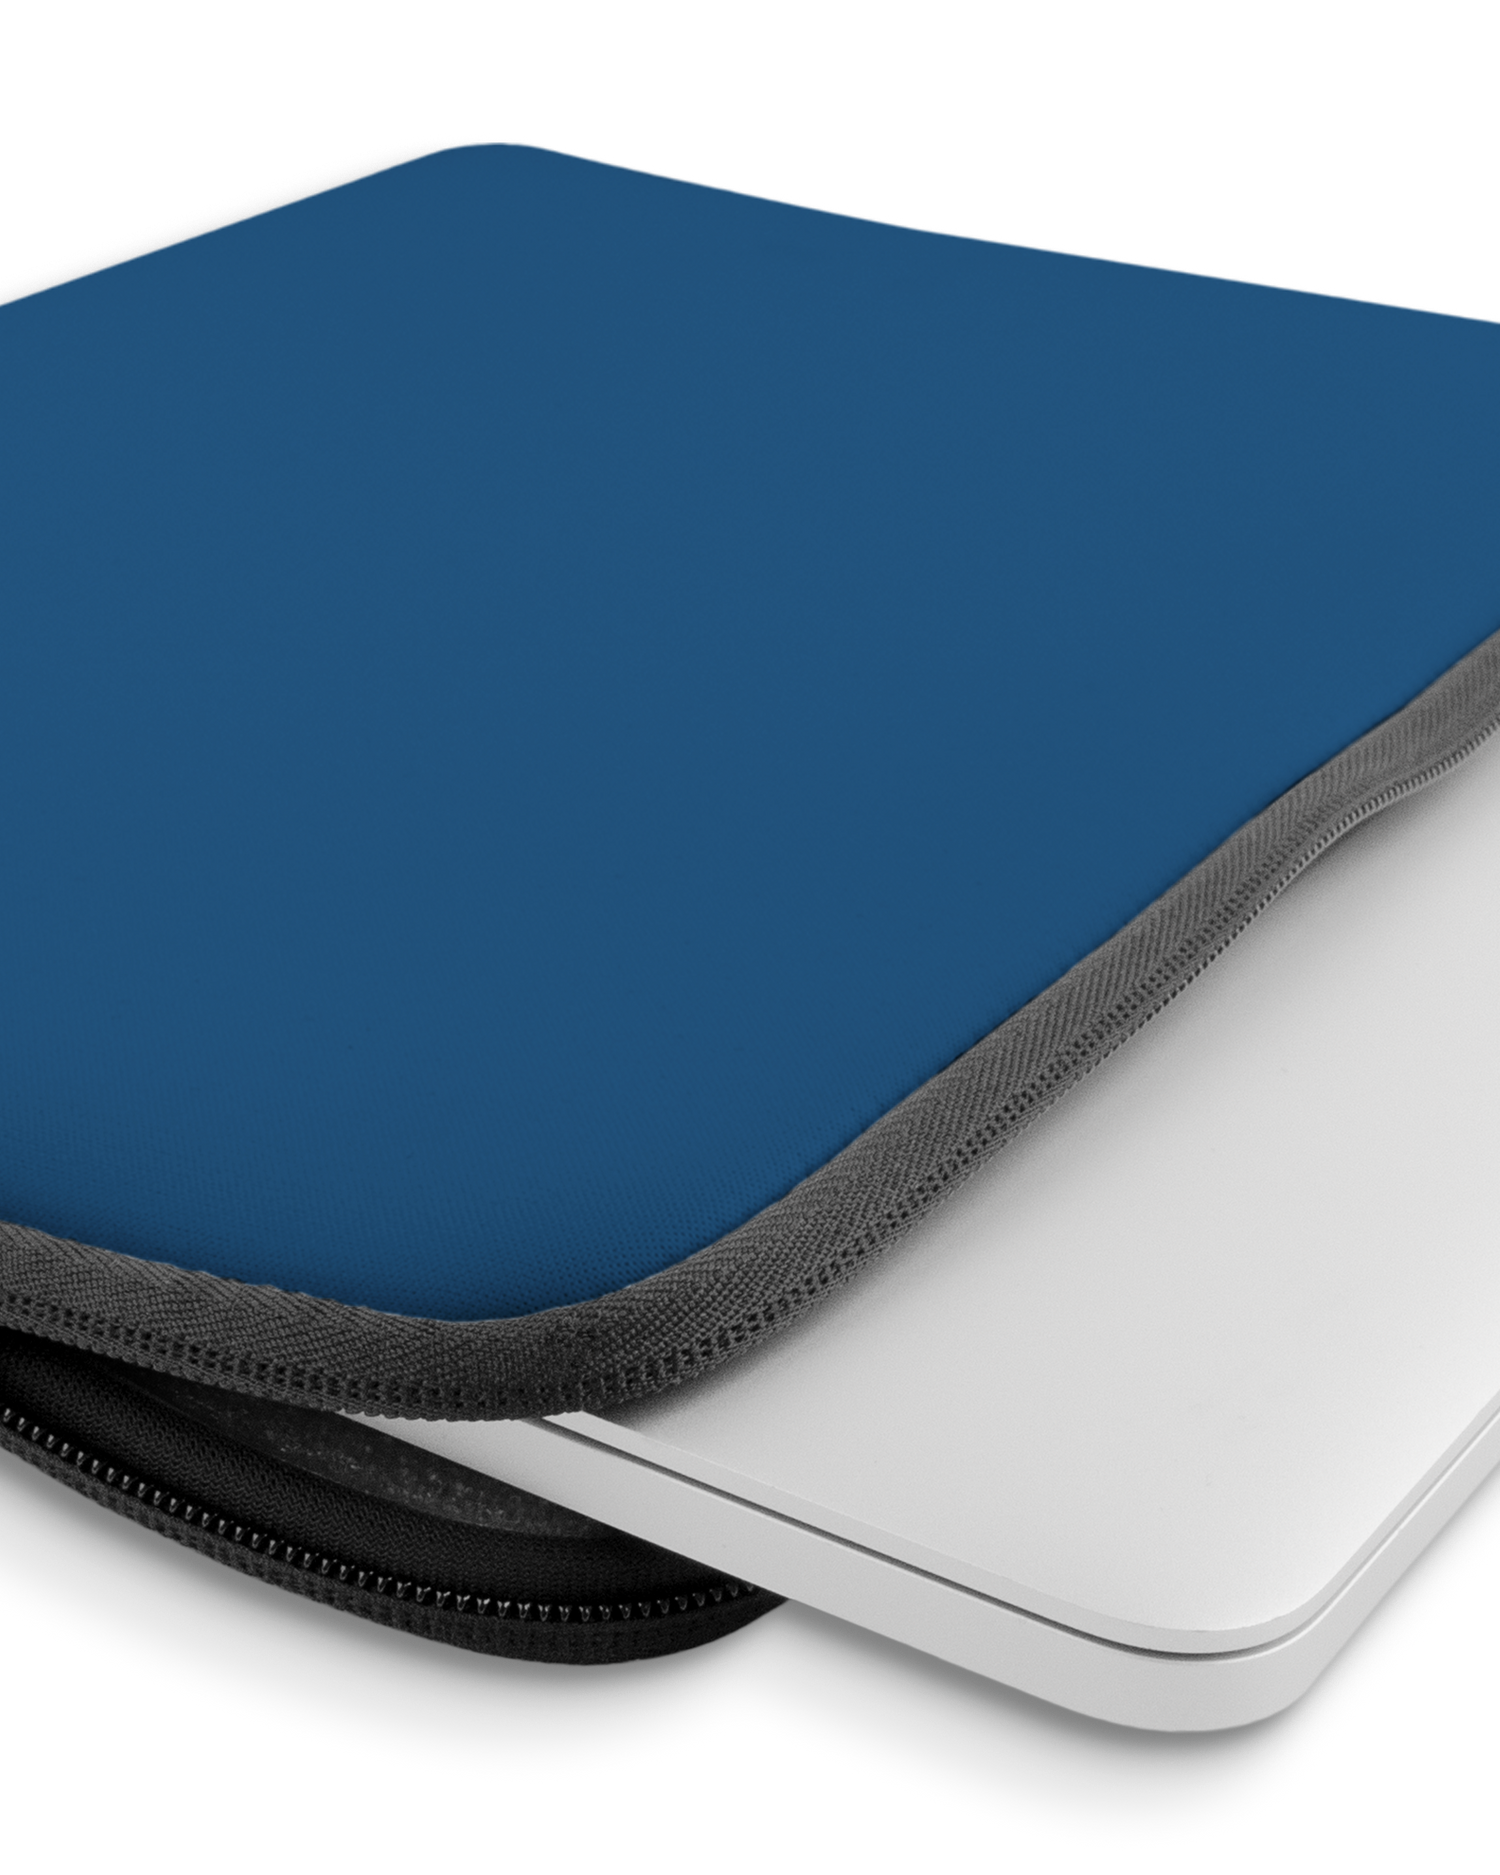 CLASSIC BLUE Laptophülle 14 Zoll mit Gerät im Inneren